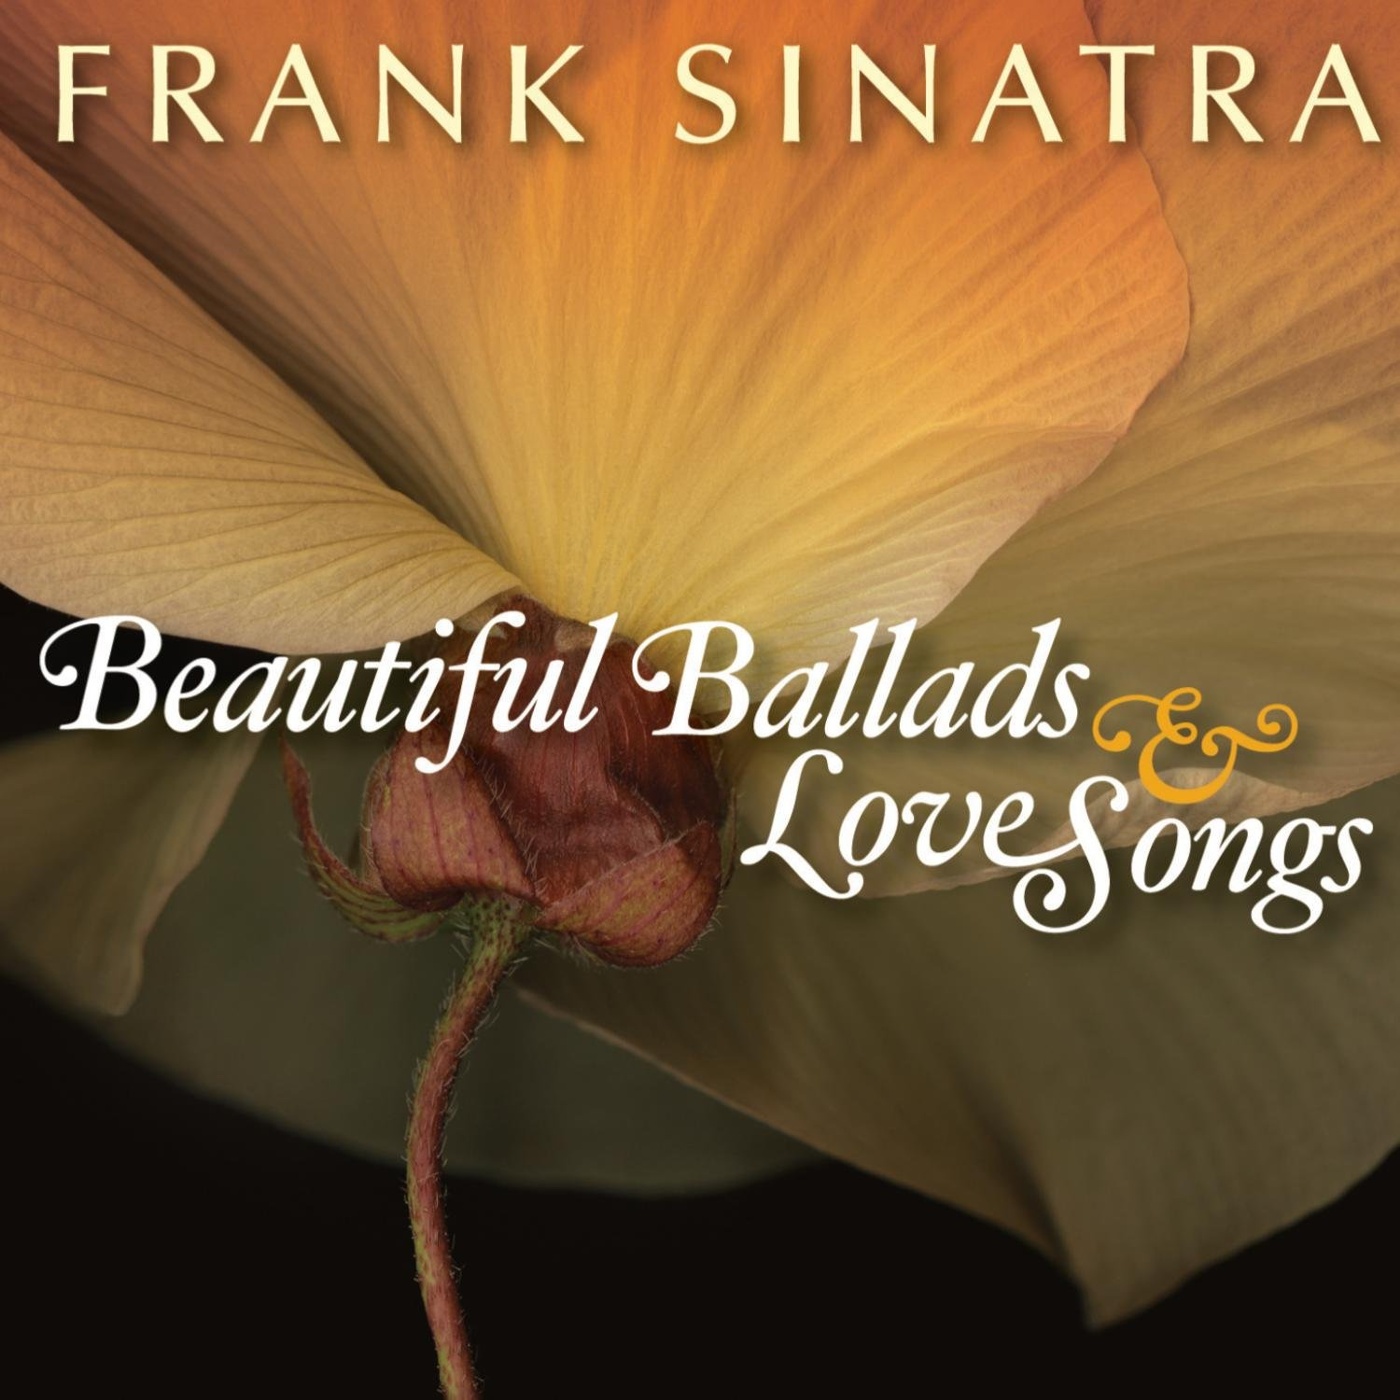 Фрэнк любимый. Beautiful Ballads. Frank Sinatra Songs. Tommy Dorsey - Stardust on the Moon album картинки. Ballad Songs.